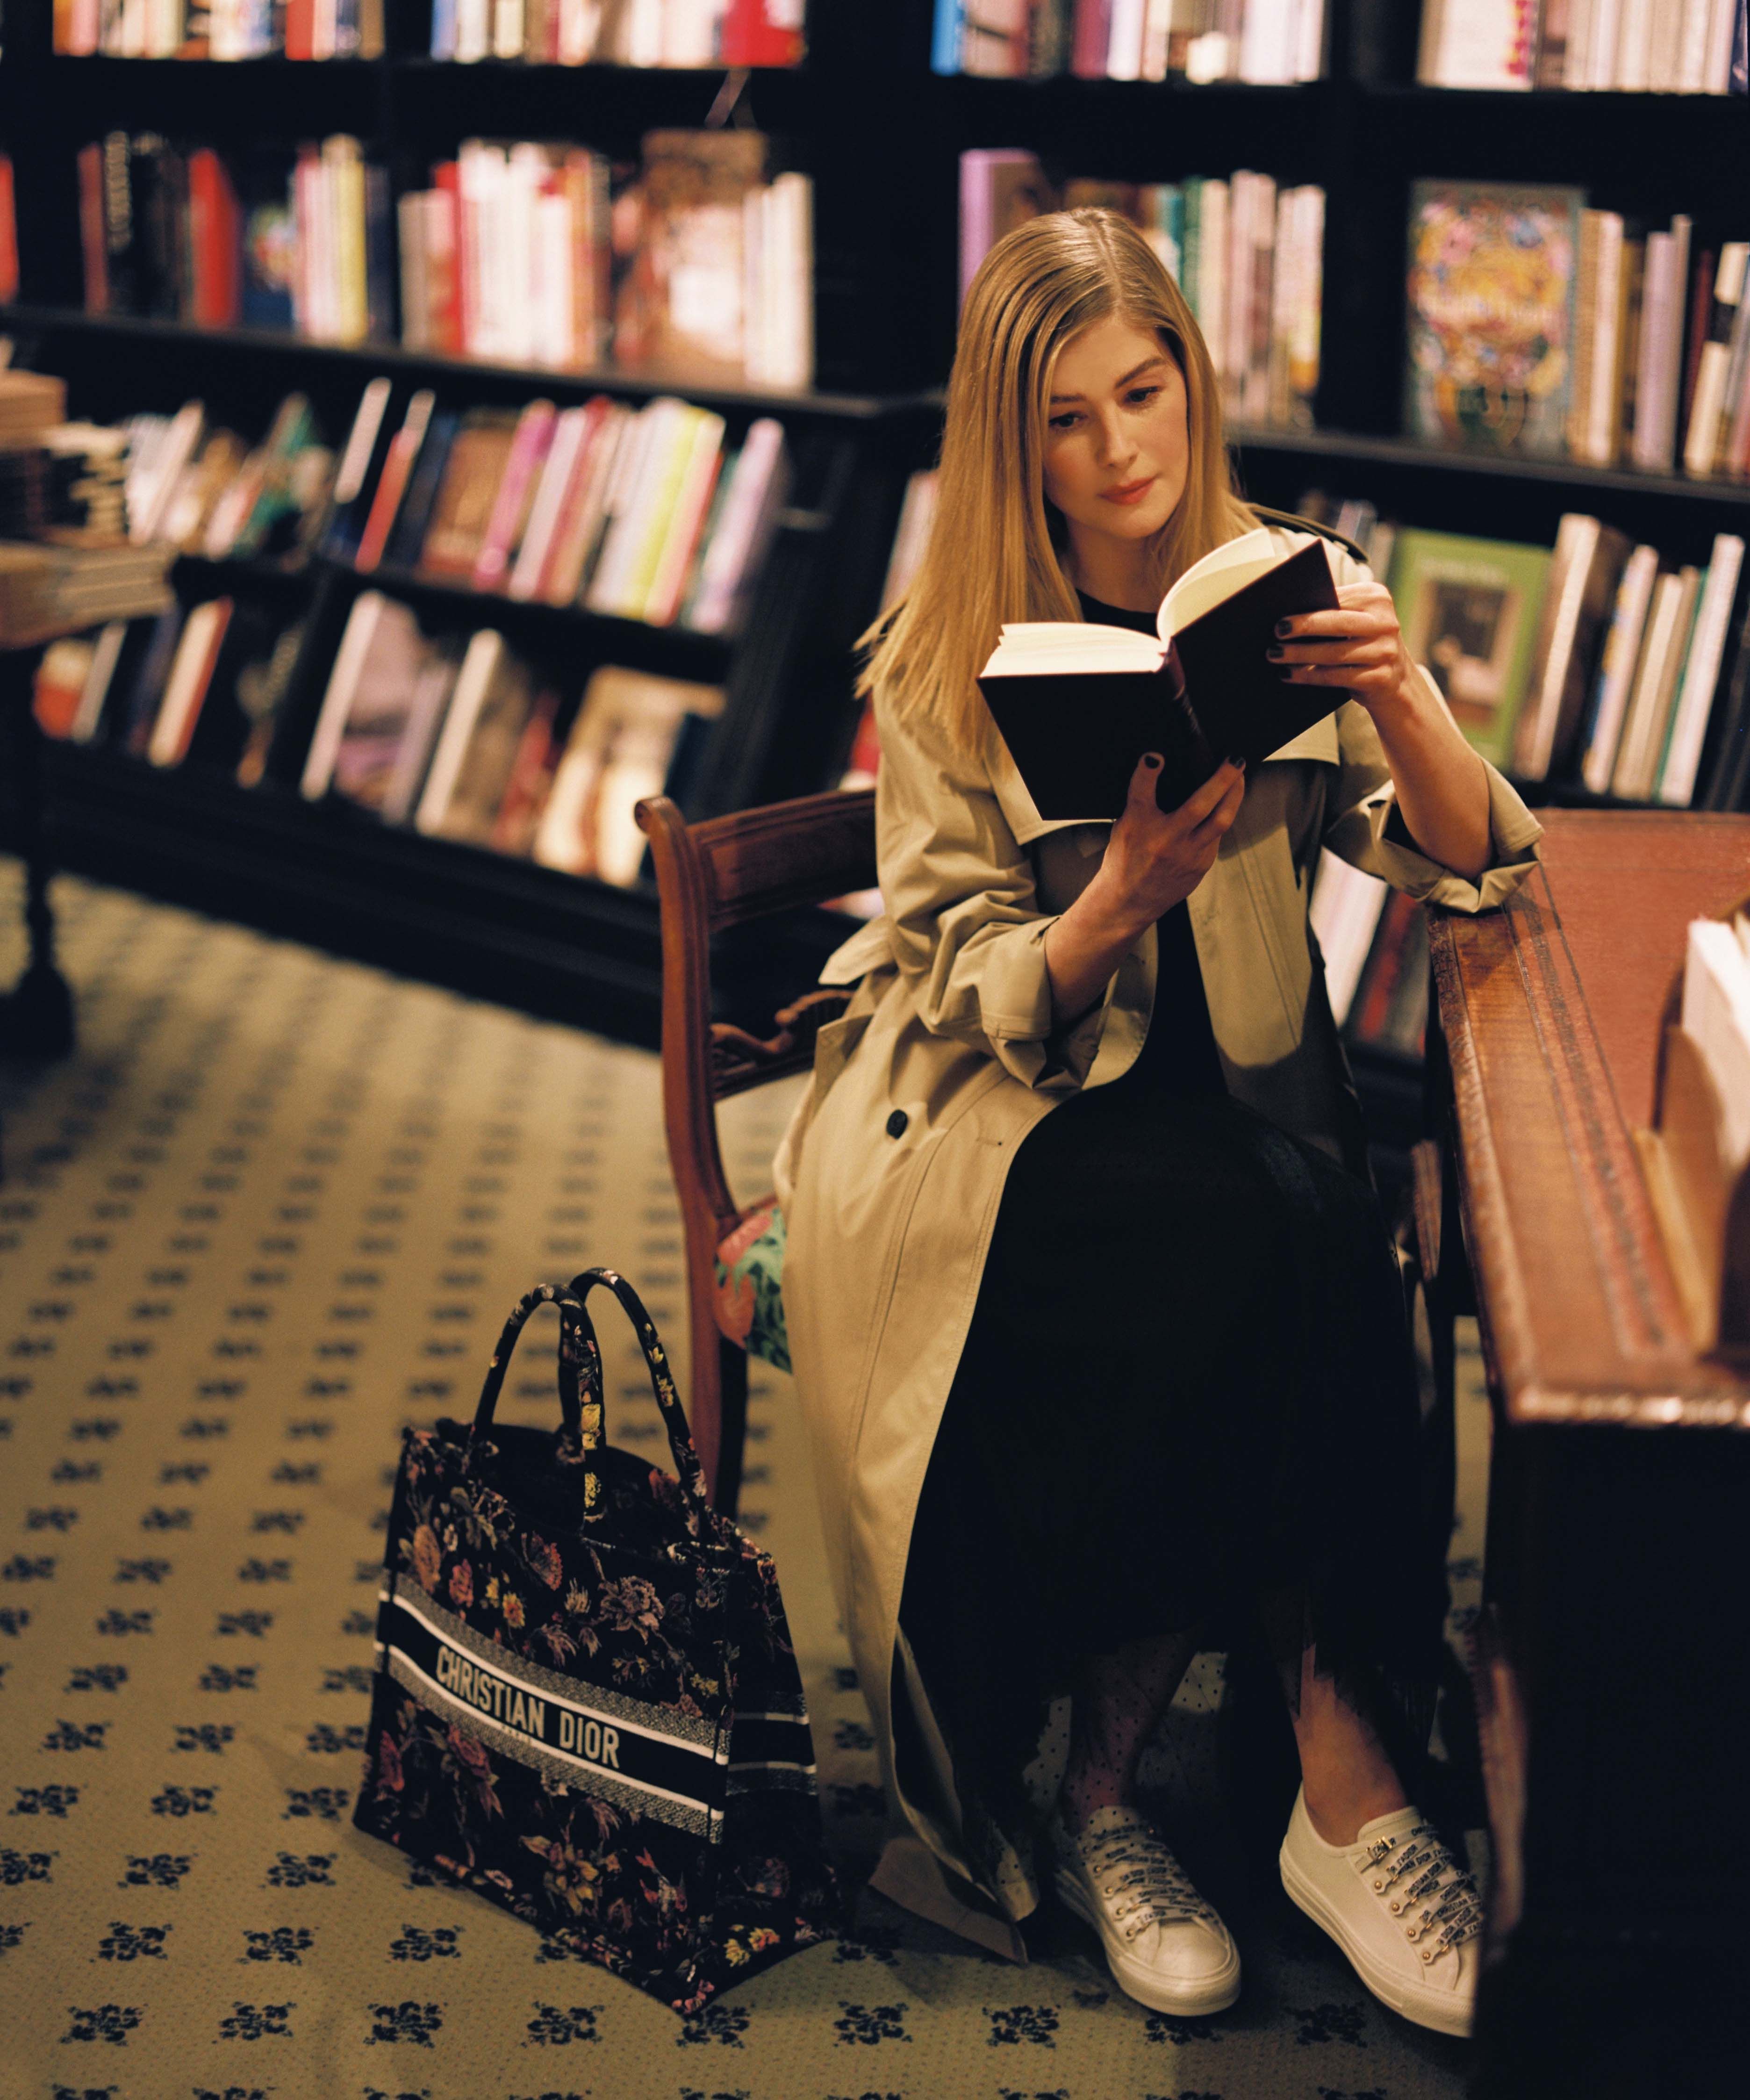 Christian Dior pre-owned Book Tote Bag - Farfetch